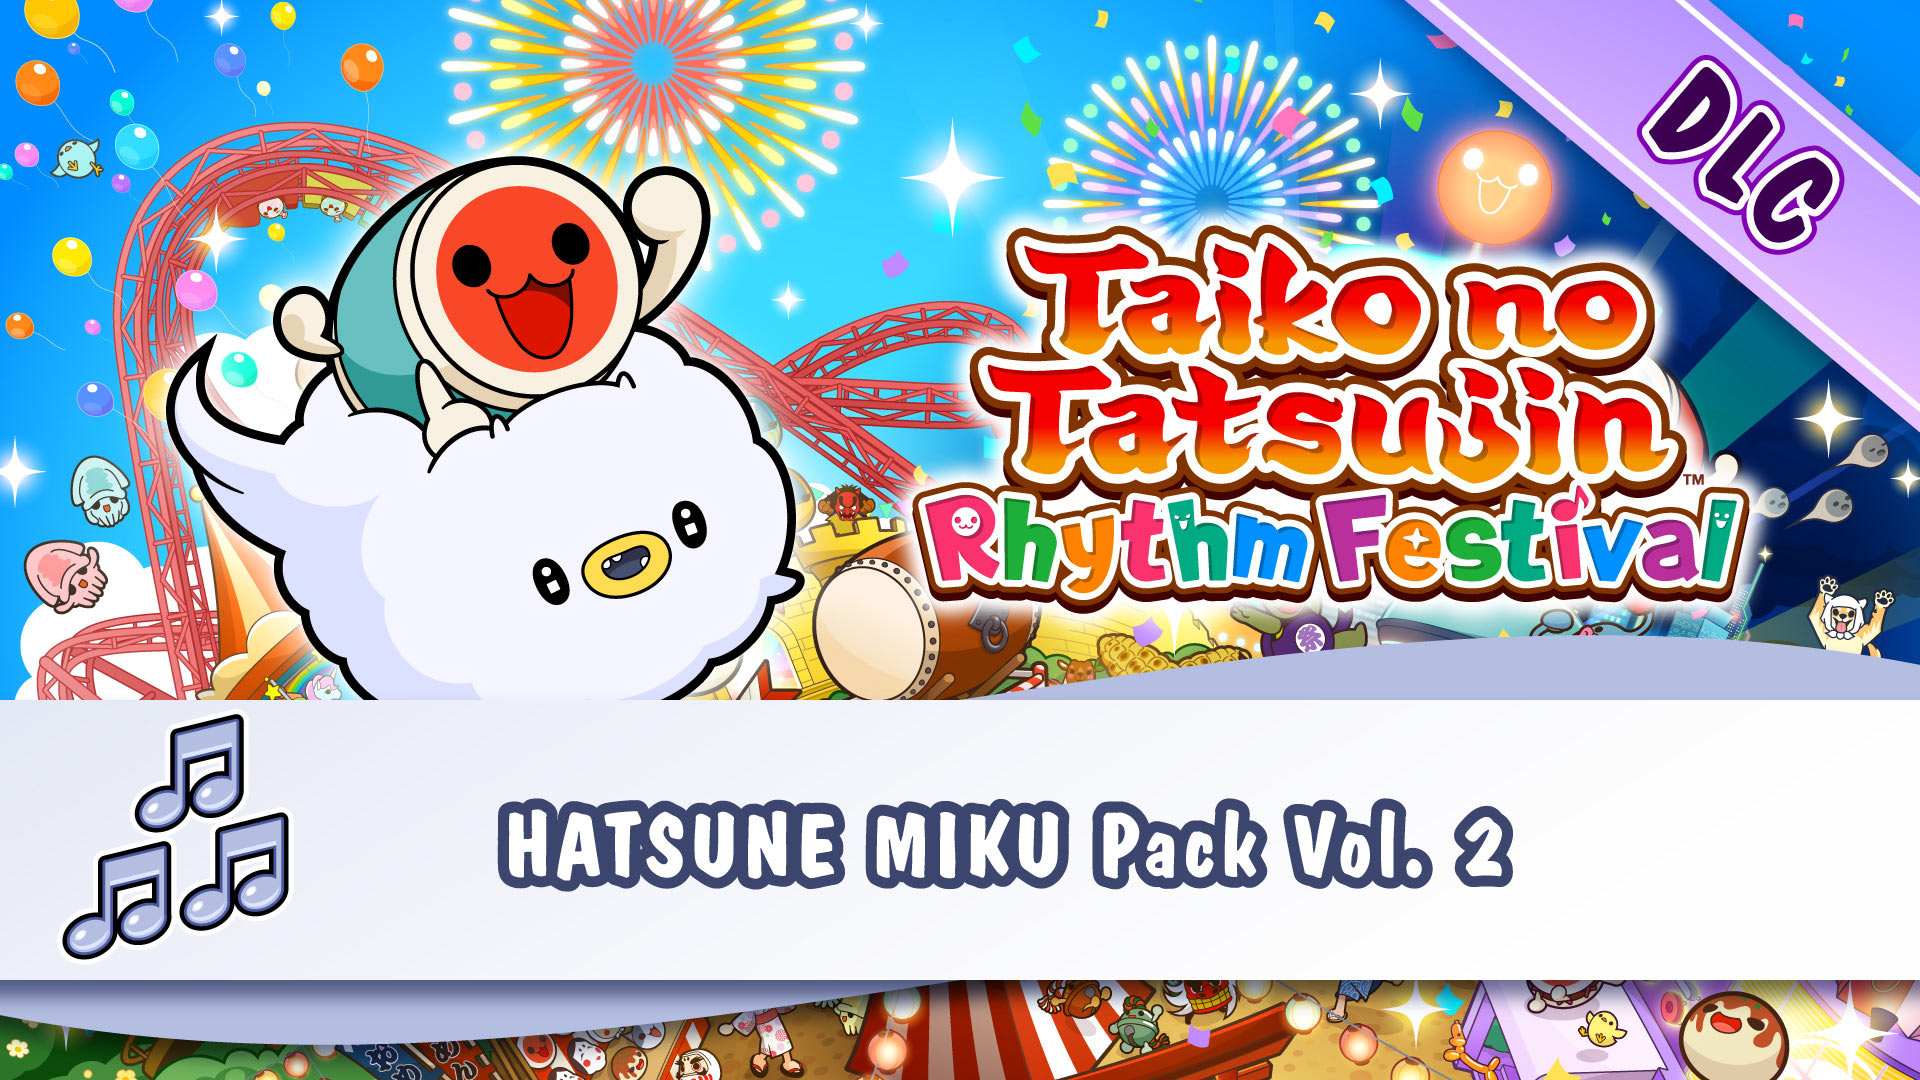 Taiko no Tatsujin: Rhythm Festival HATSUNE MIKU Pack Vol. 2